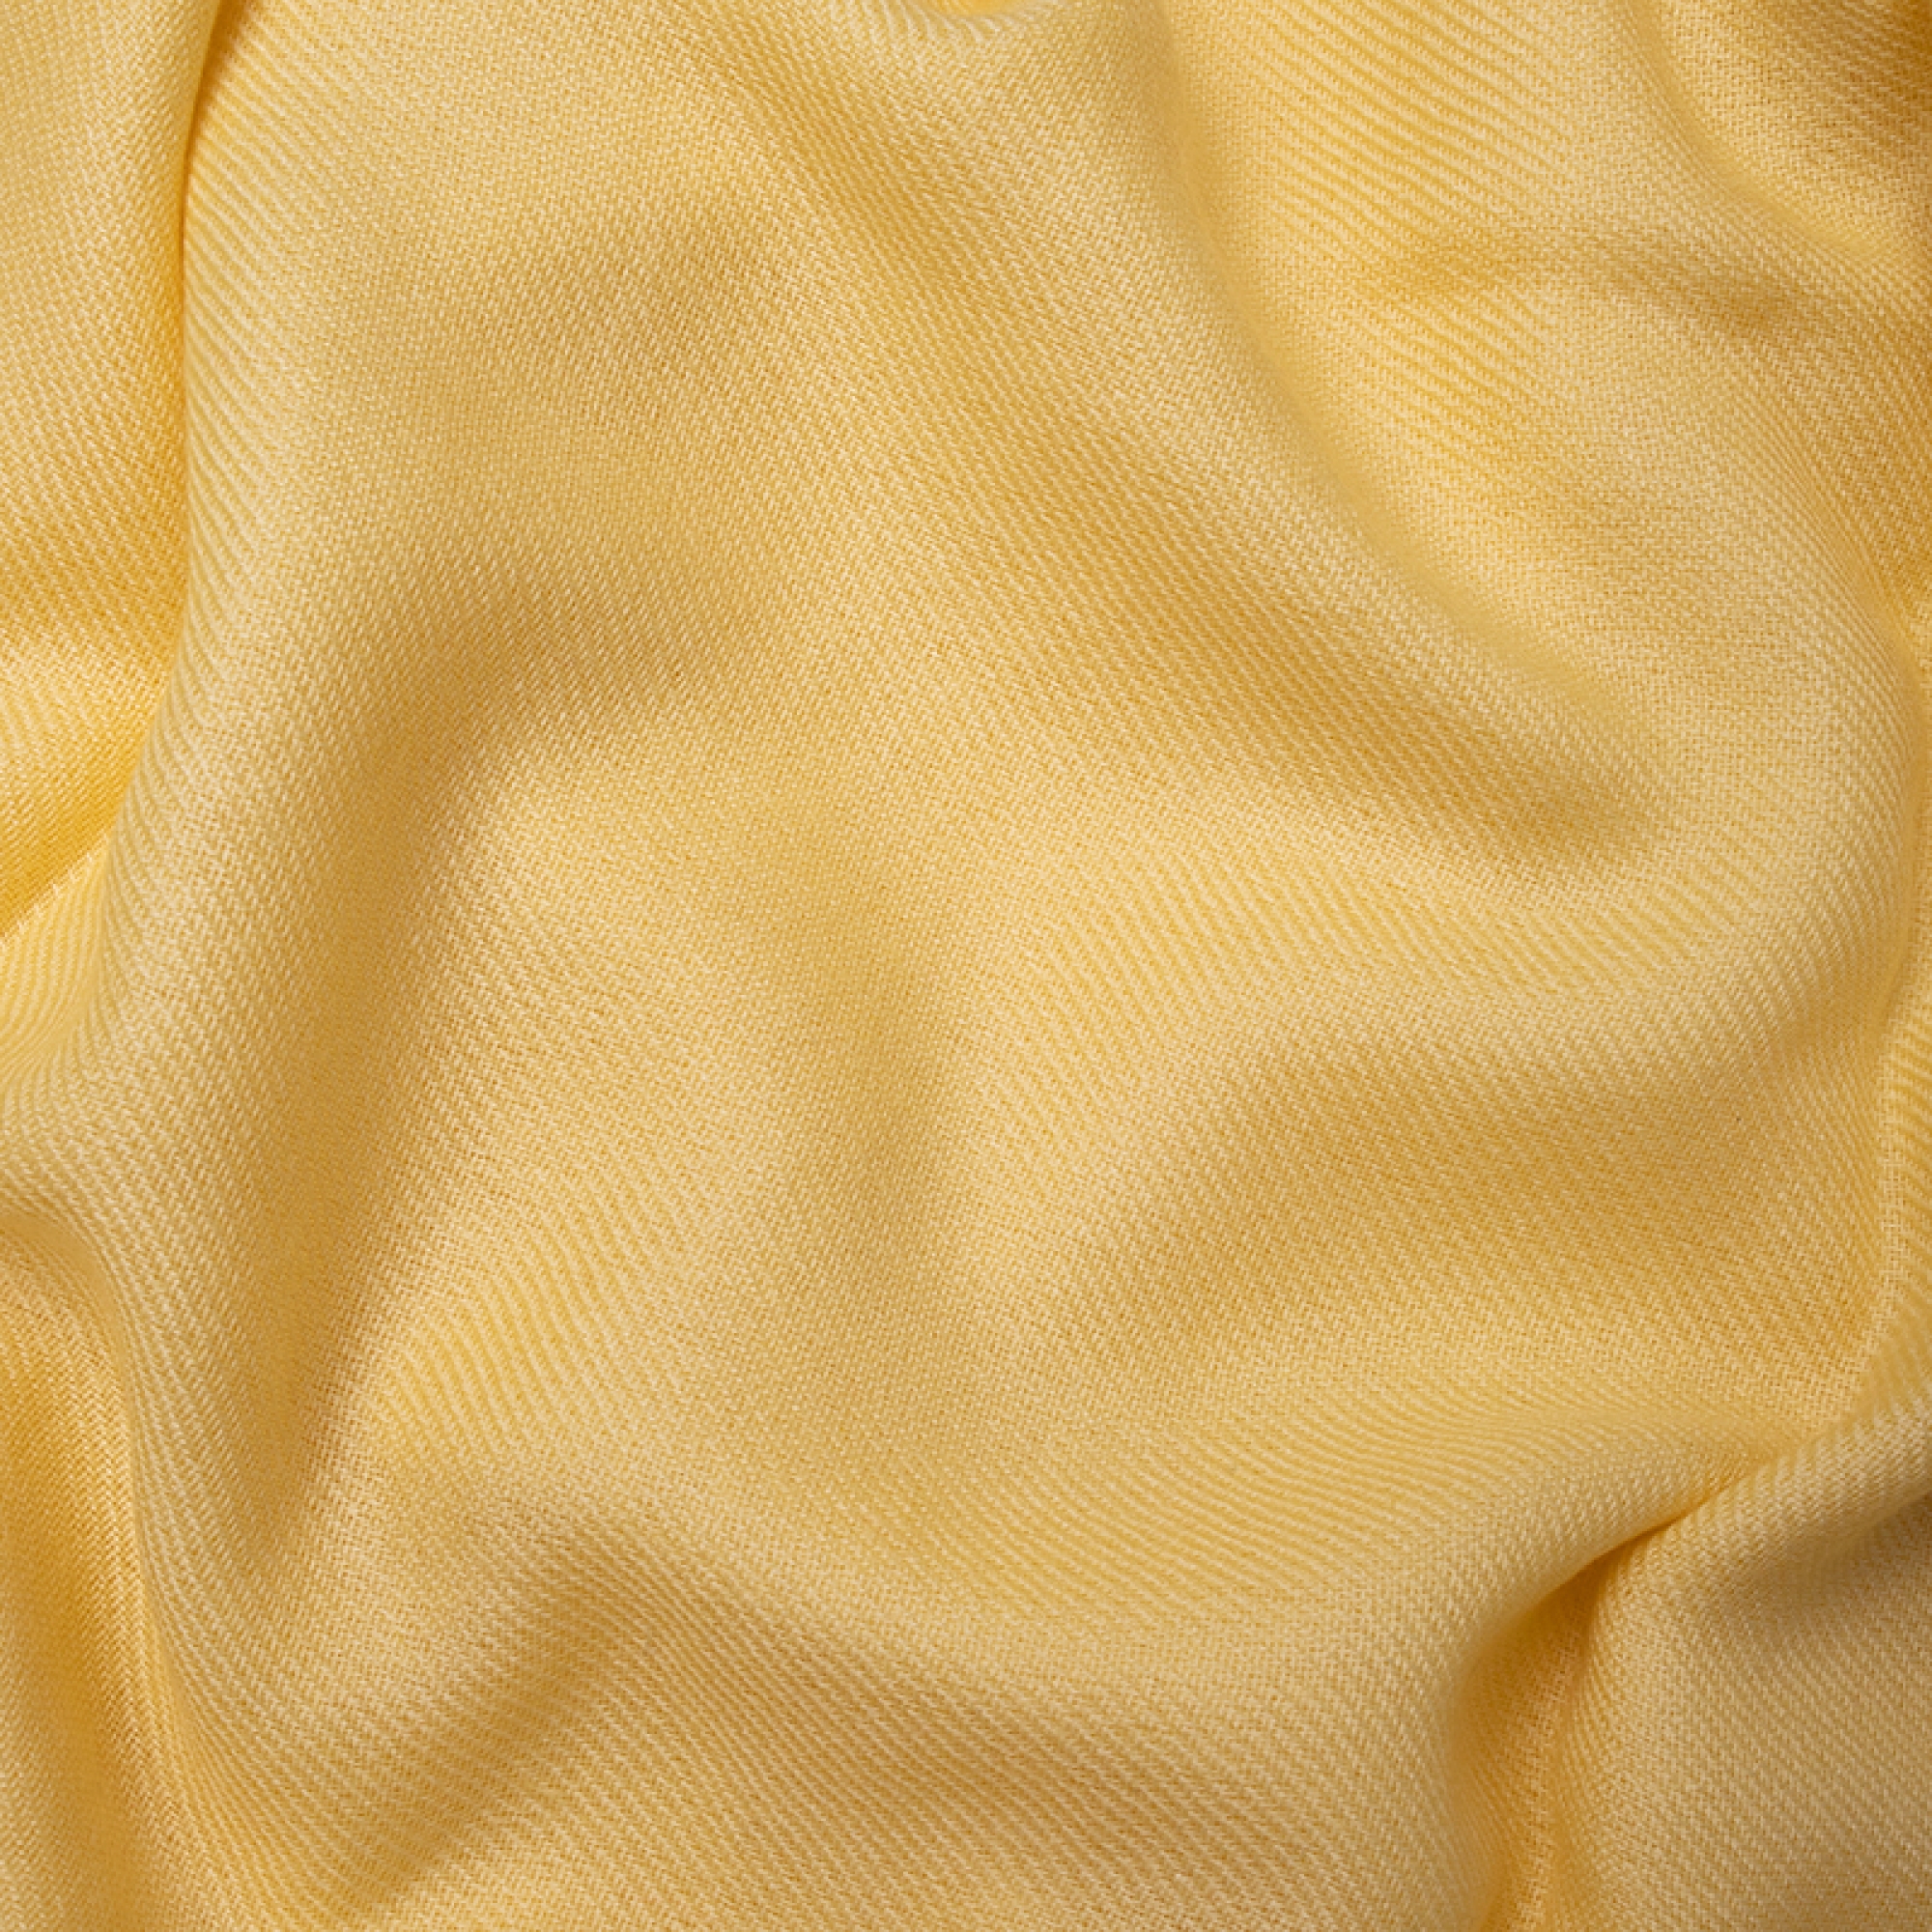 Cachemire pull homme toodoo plain xl 240 x 260 jaune pastel 240 x 260 cm